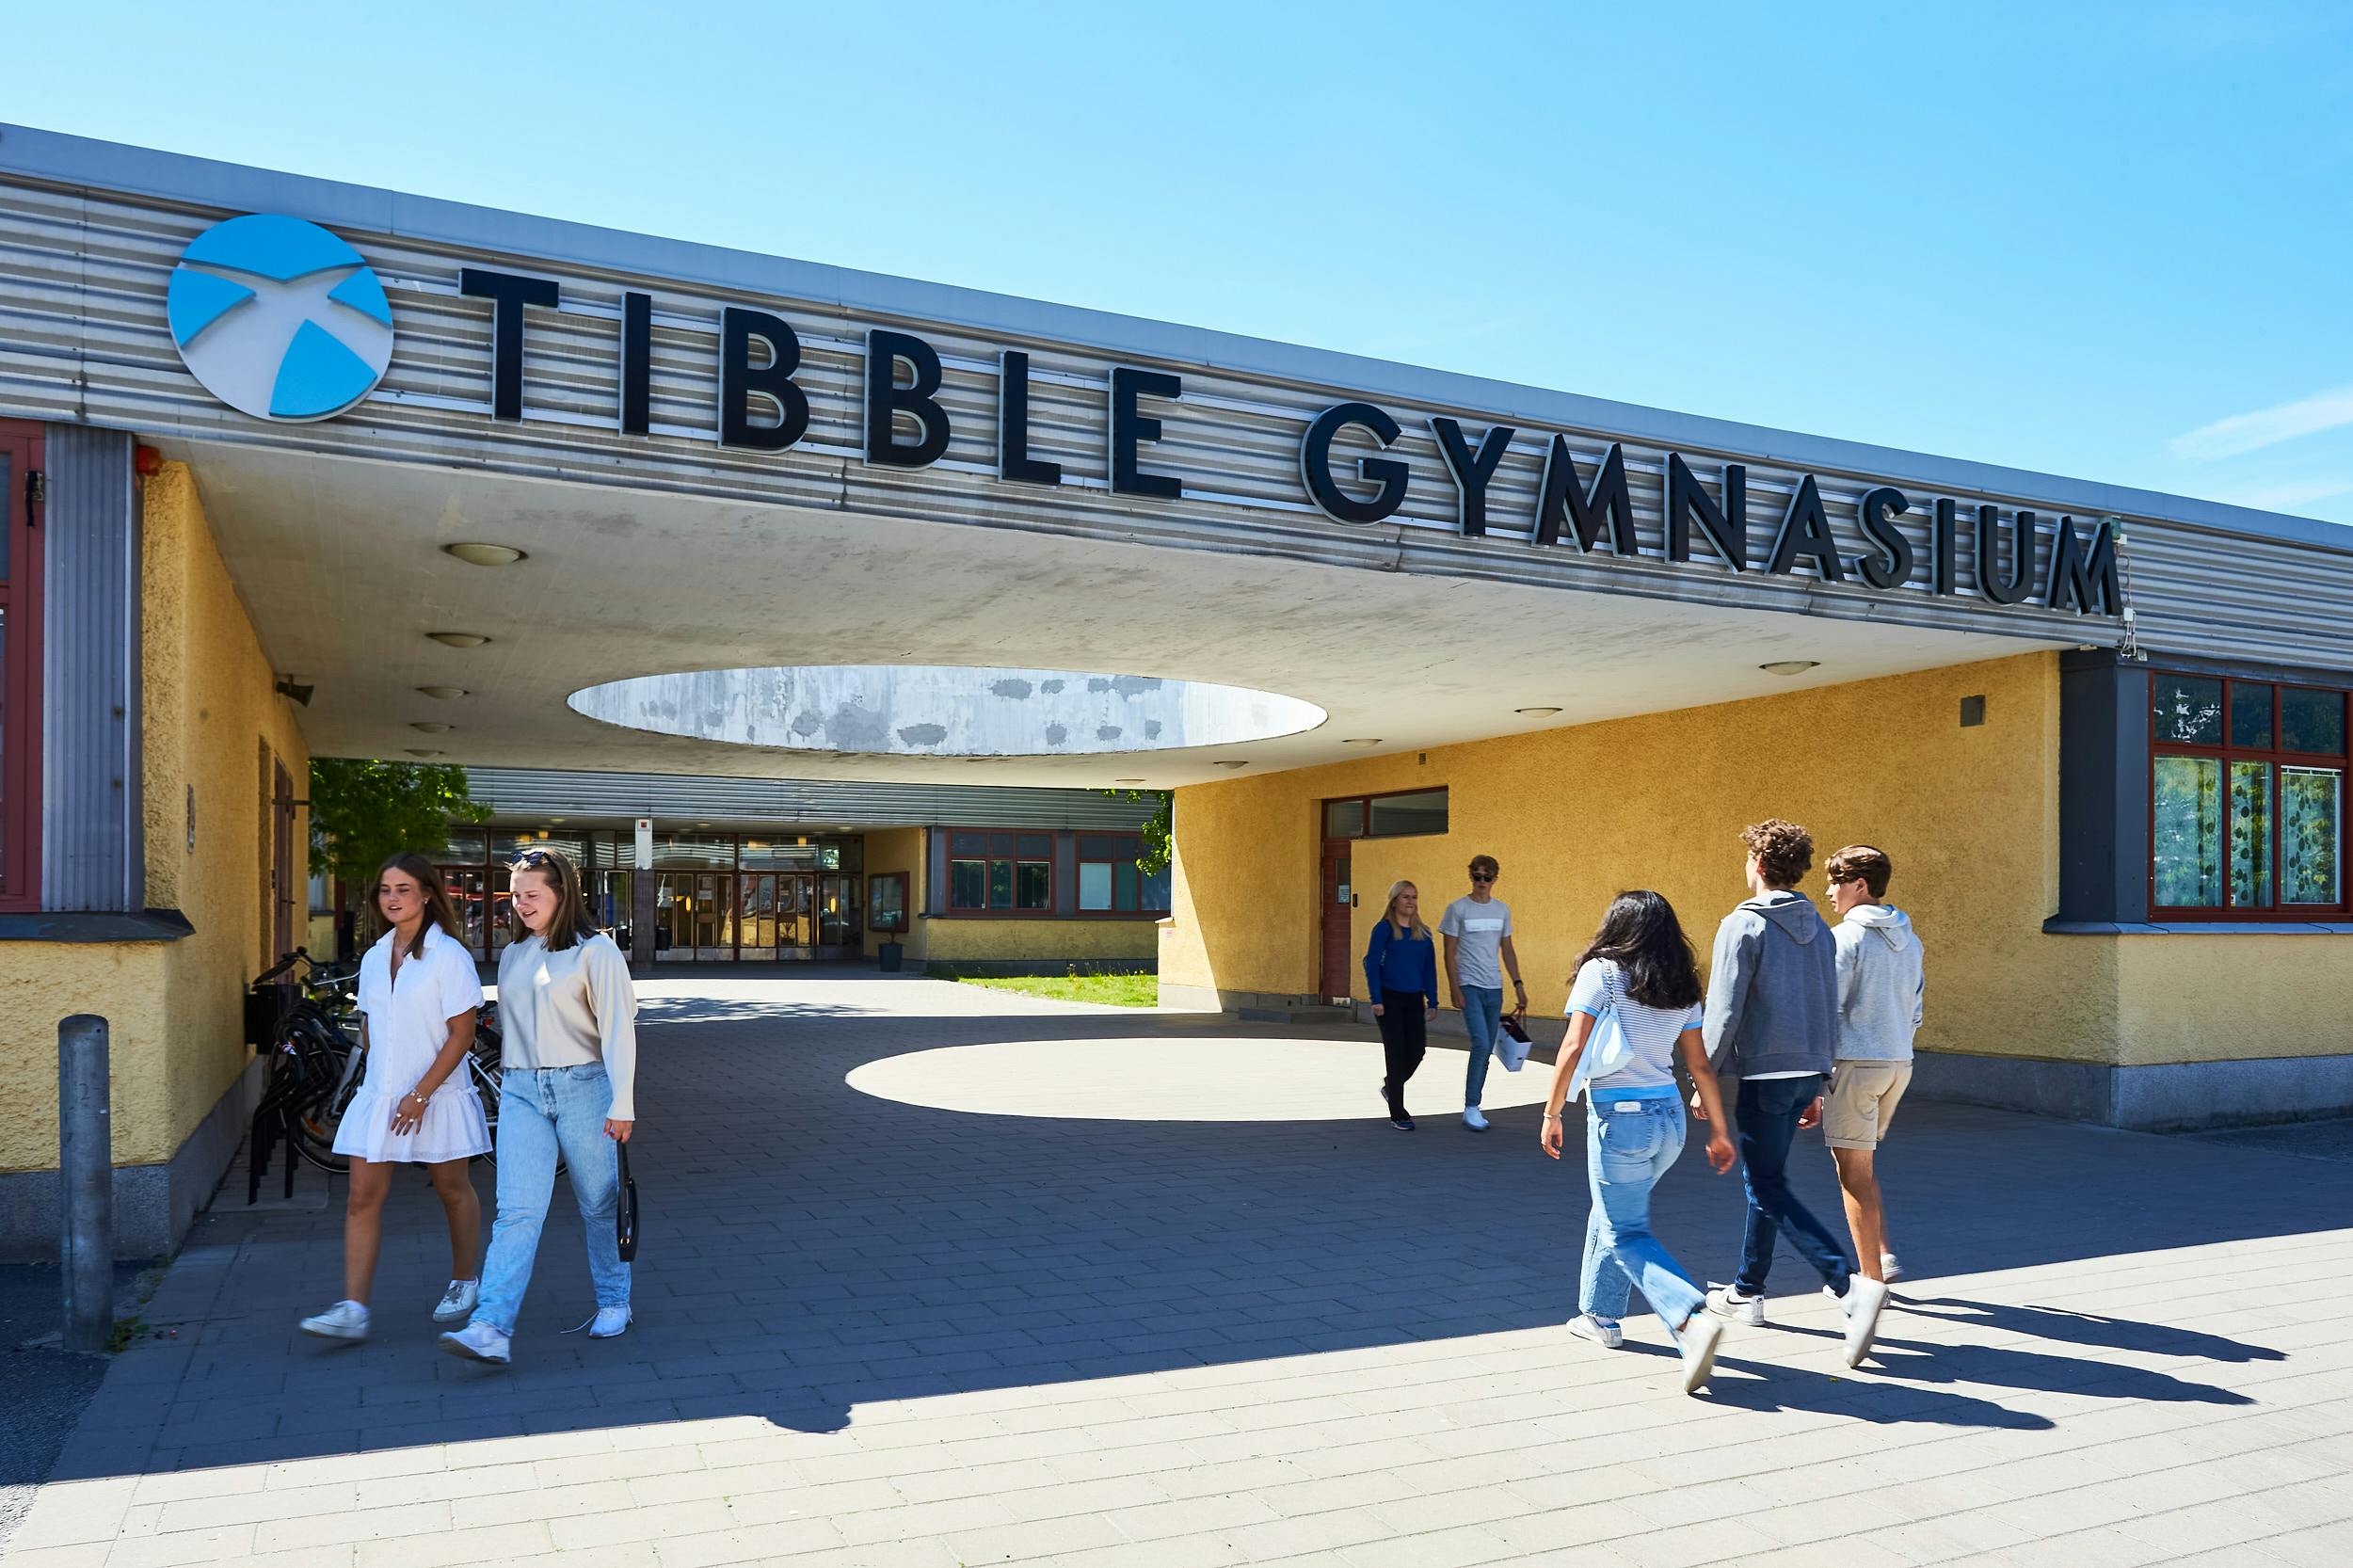 Tibble gymnasium campus Täby